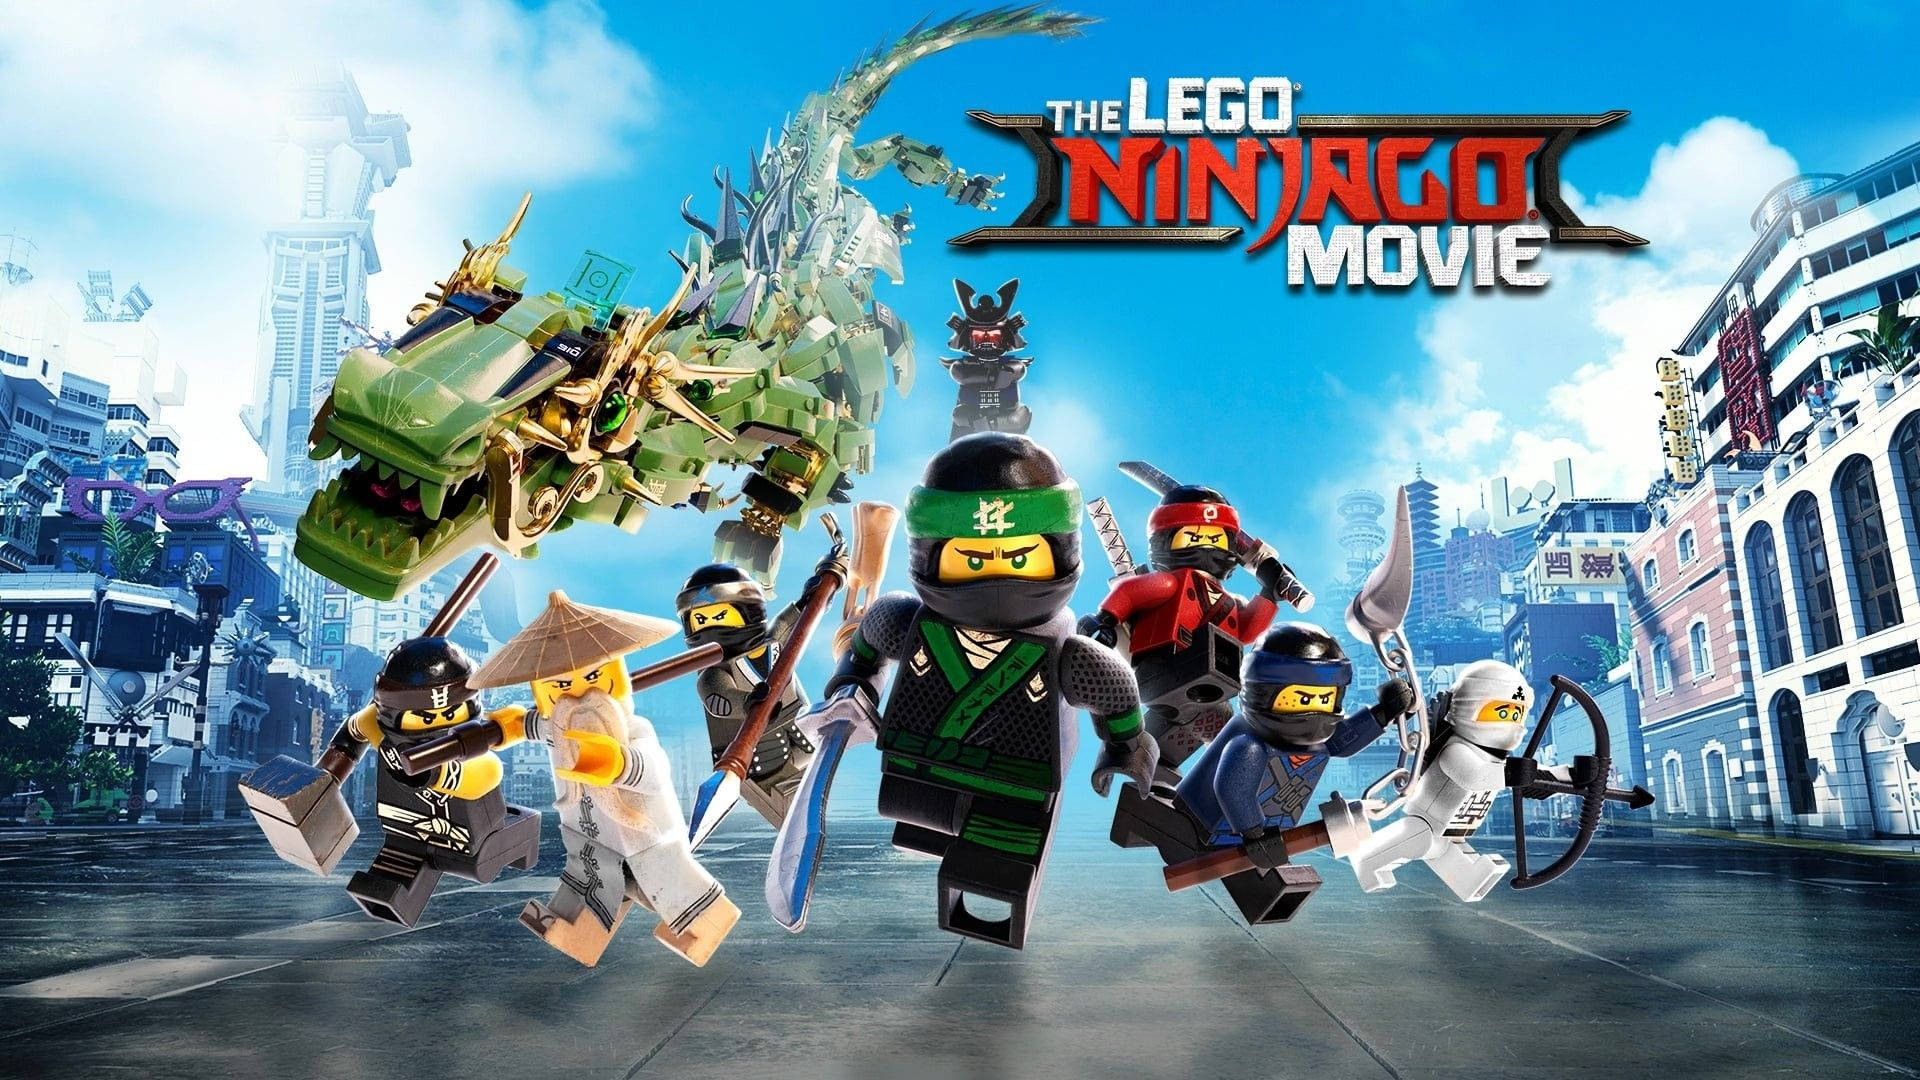 The Lego Ninjago Movie Action Scene Wallpaper